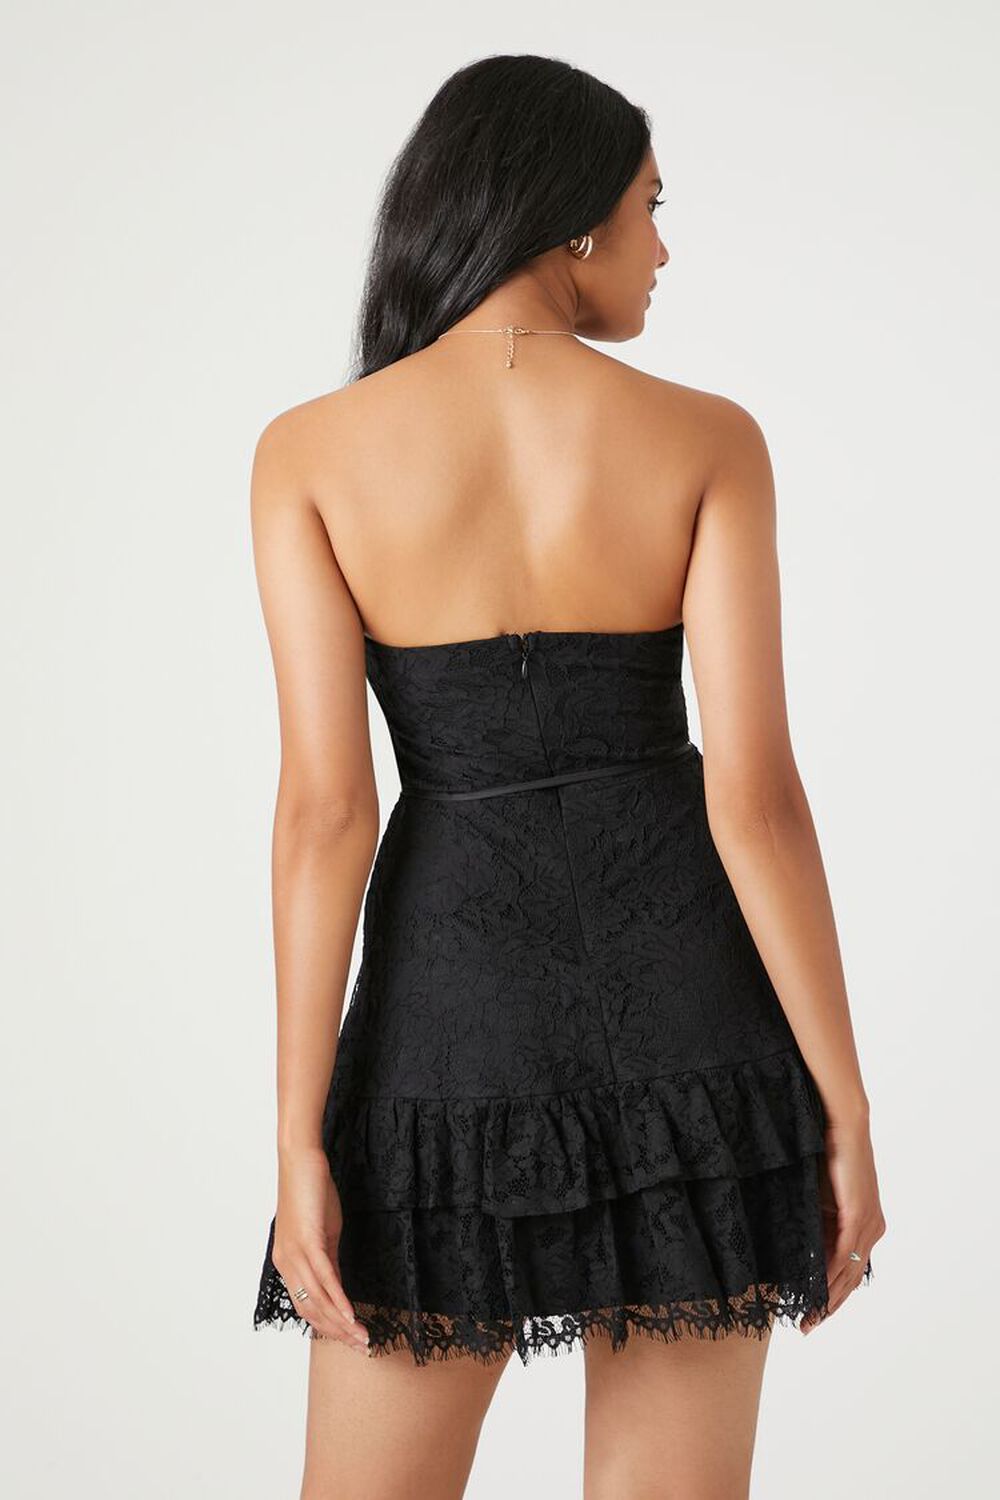 BLACK Lace Sweetheart Ruffle-Trim Dress, image 3